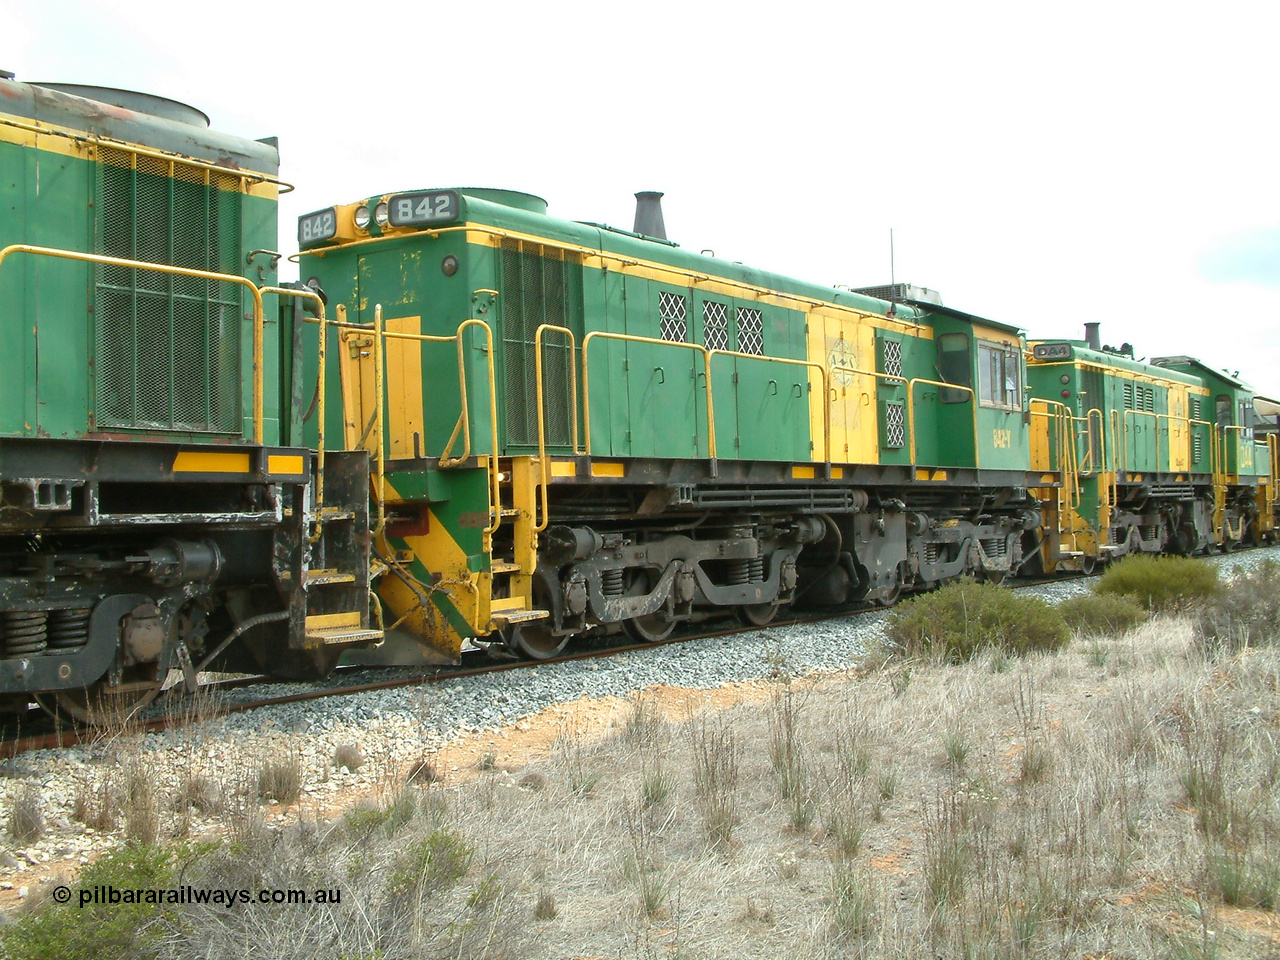 030409 120830
Kielpa, former Australian National locomotive AE Goodwin ALCo model DL531 830 class unit 842 serial 84140.
Keywords: 830-class;842;84140;AE-Goodwin;ALCo;DL531;